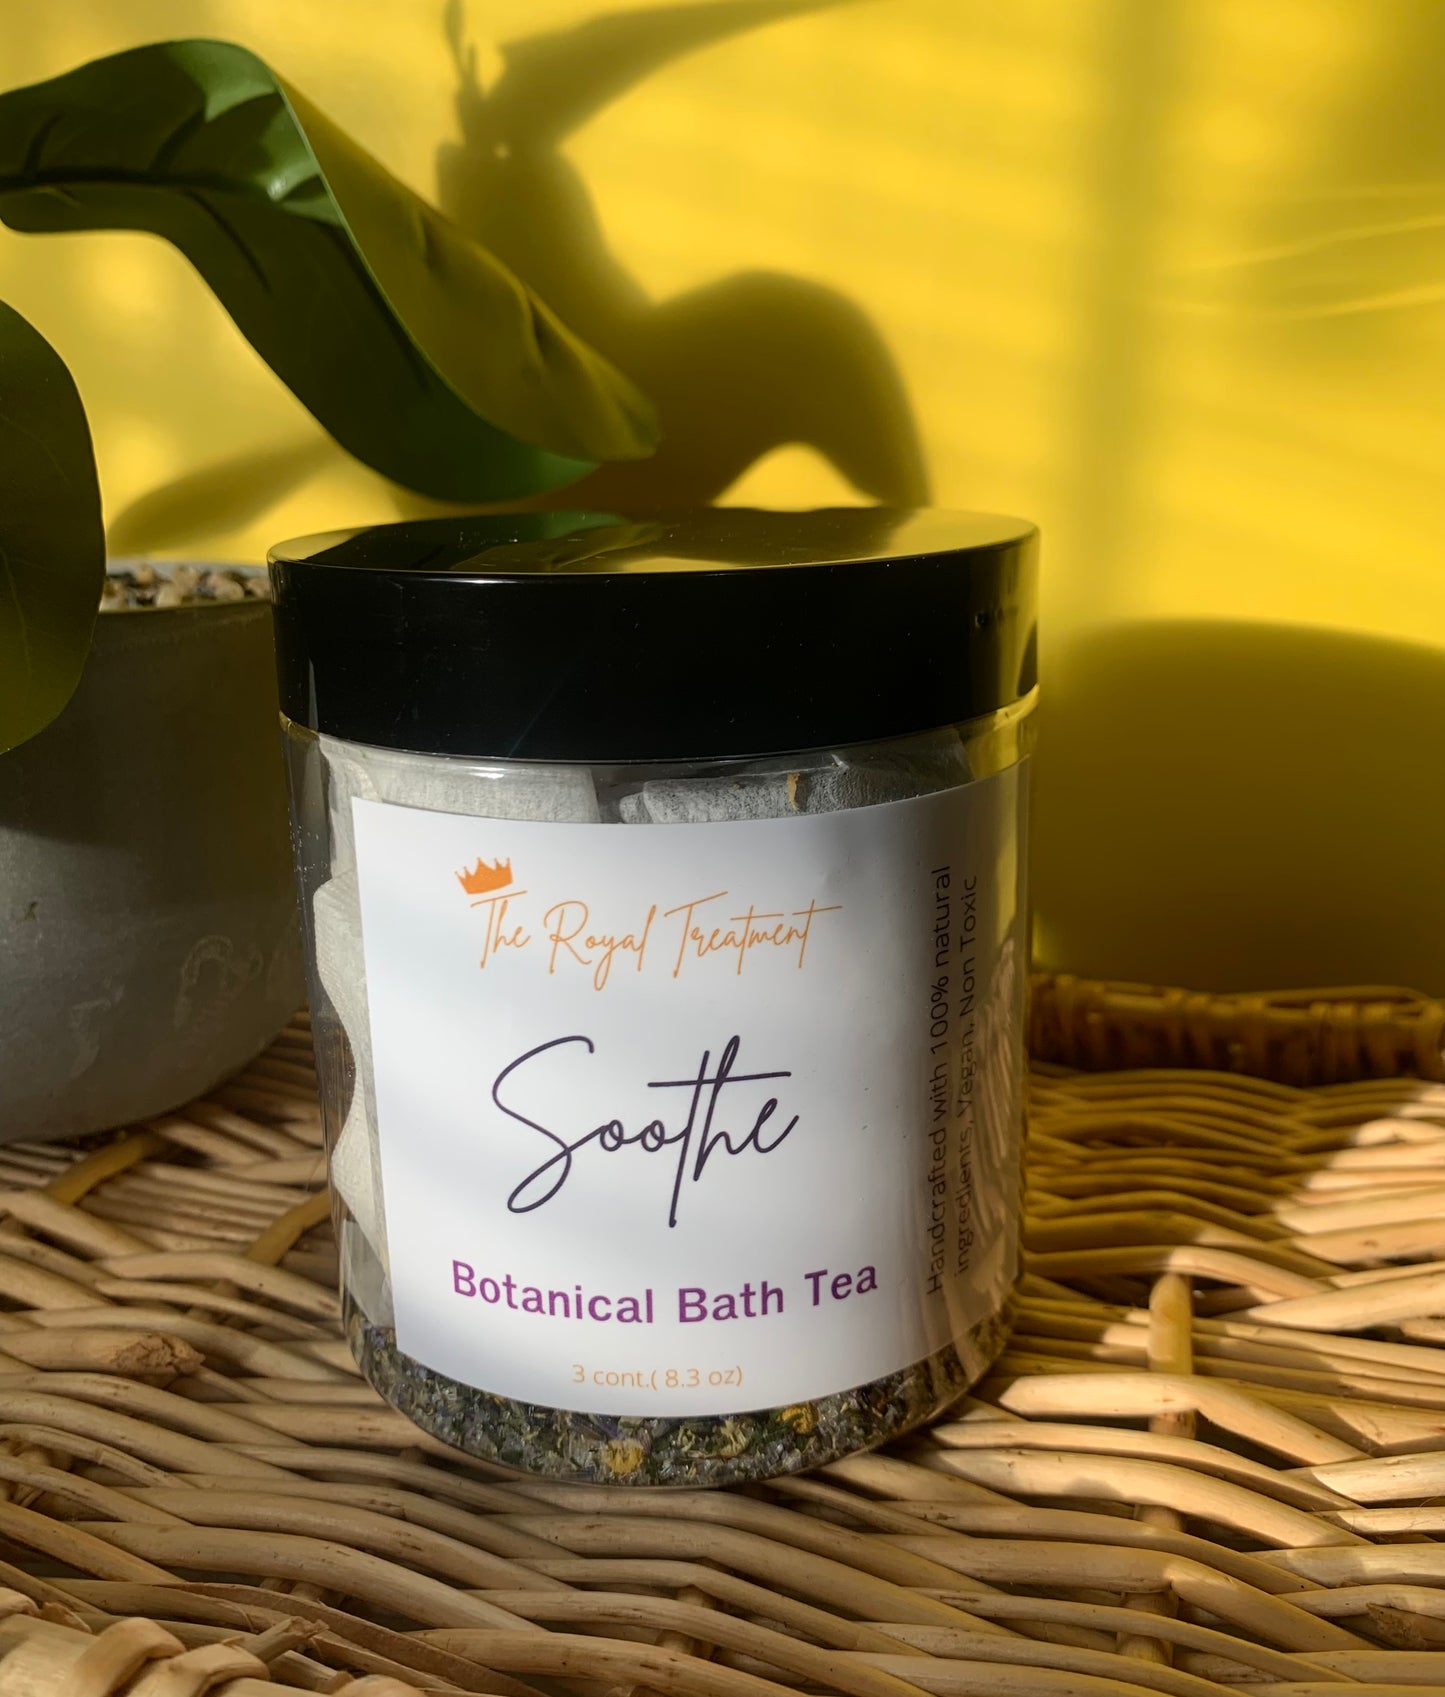 Botanical Bath Tea